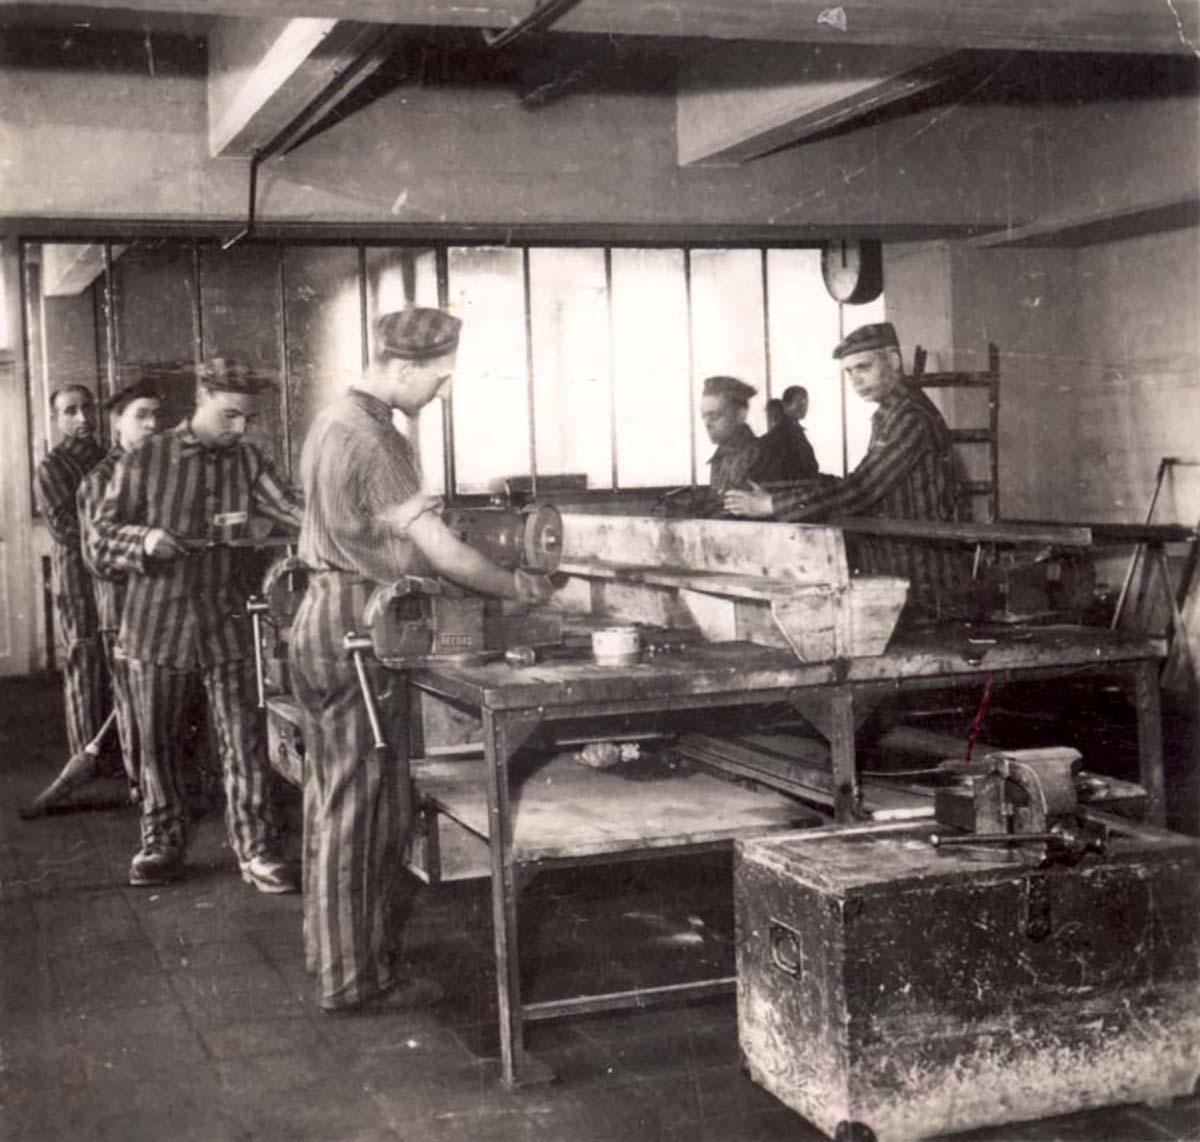 Blechhammer, Germany, April 1944, Prisoners Working in an Electronics Workshop